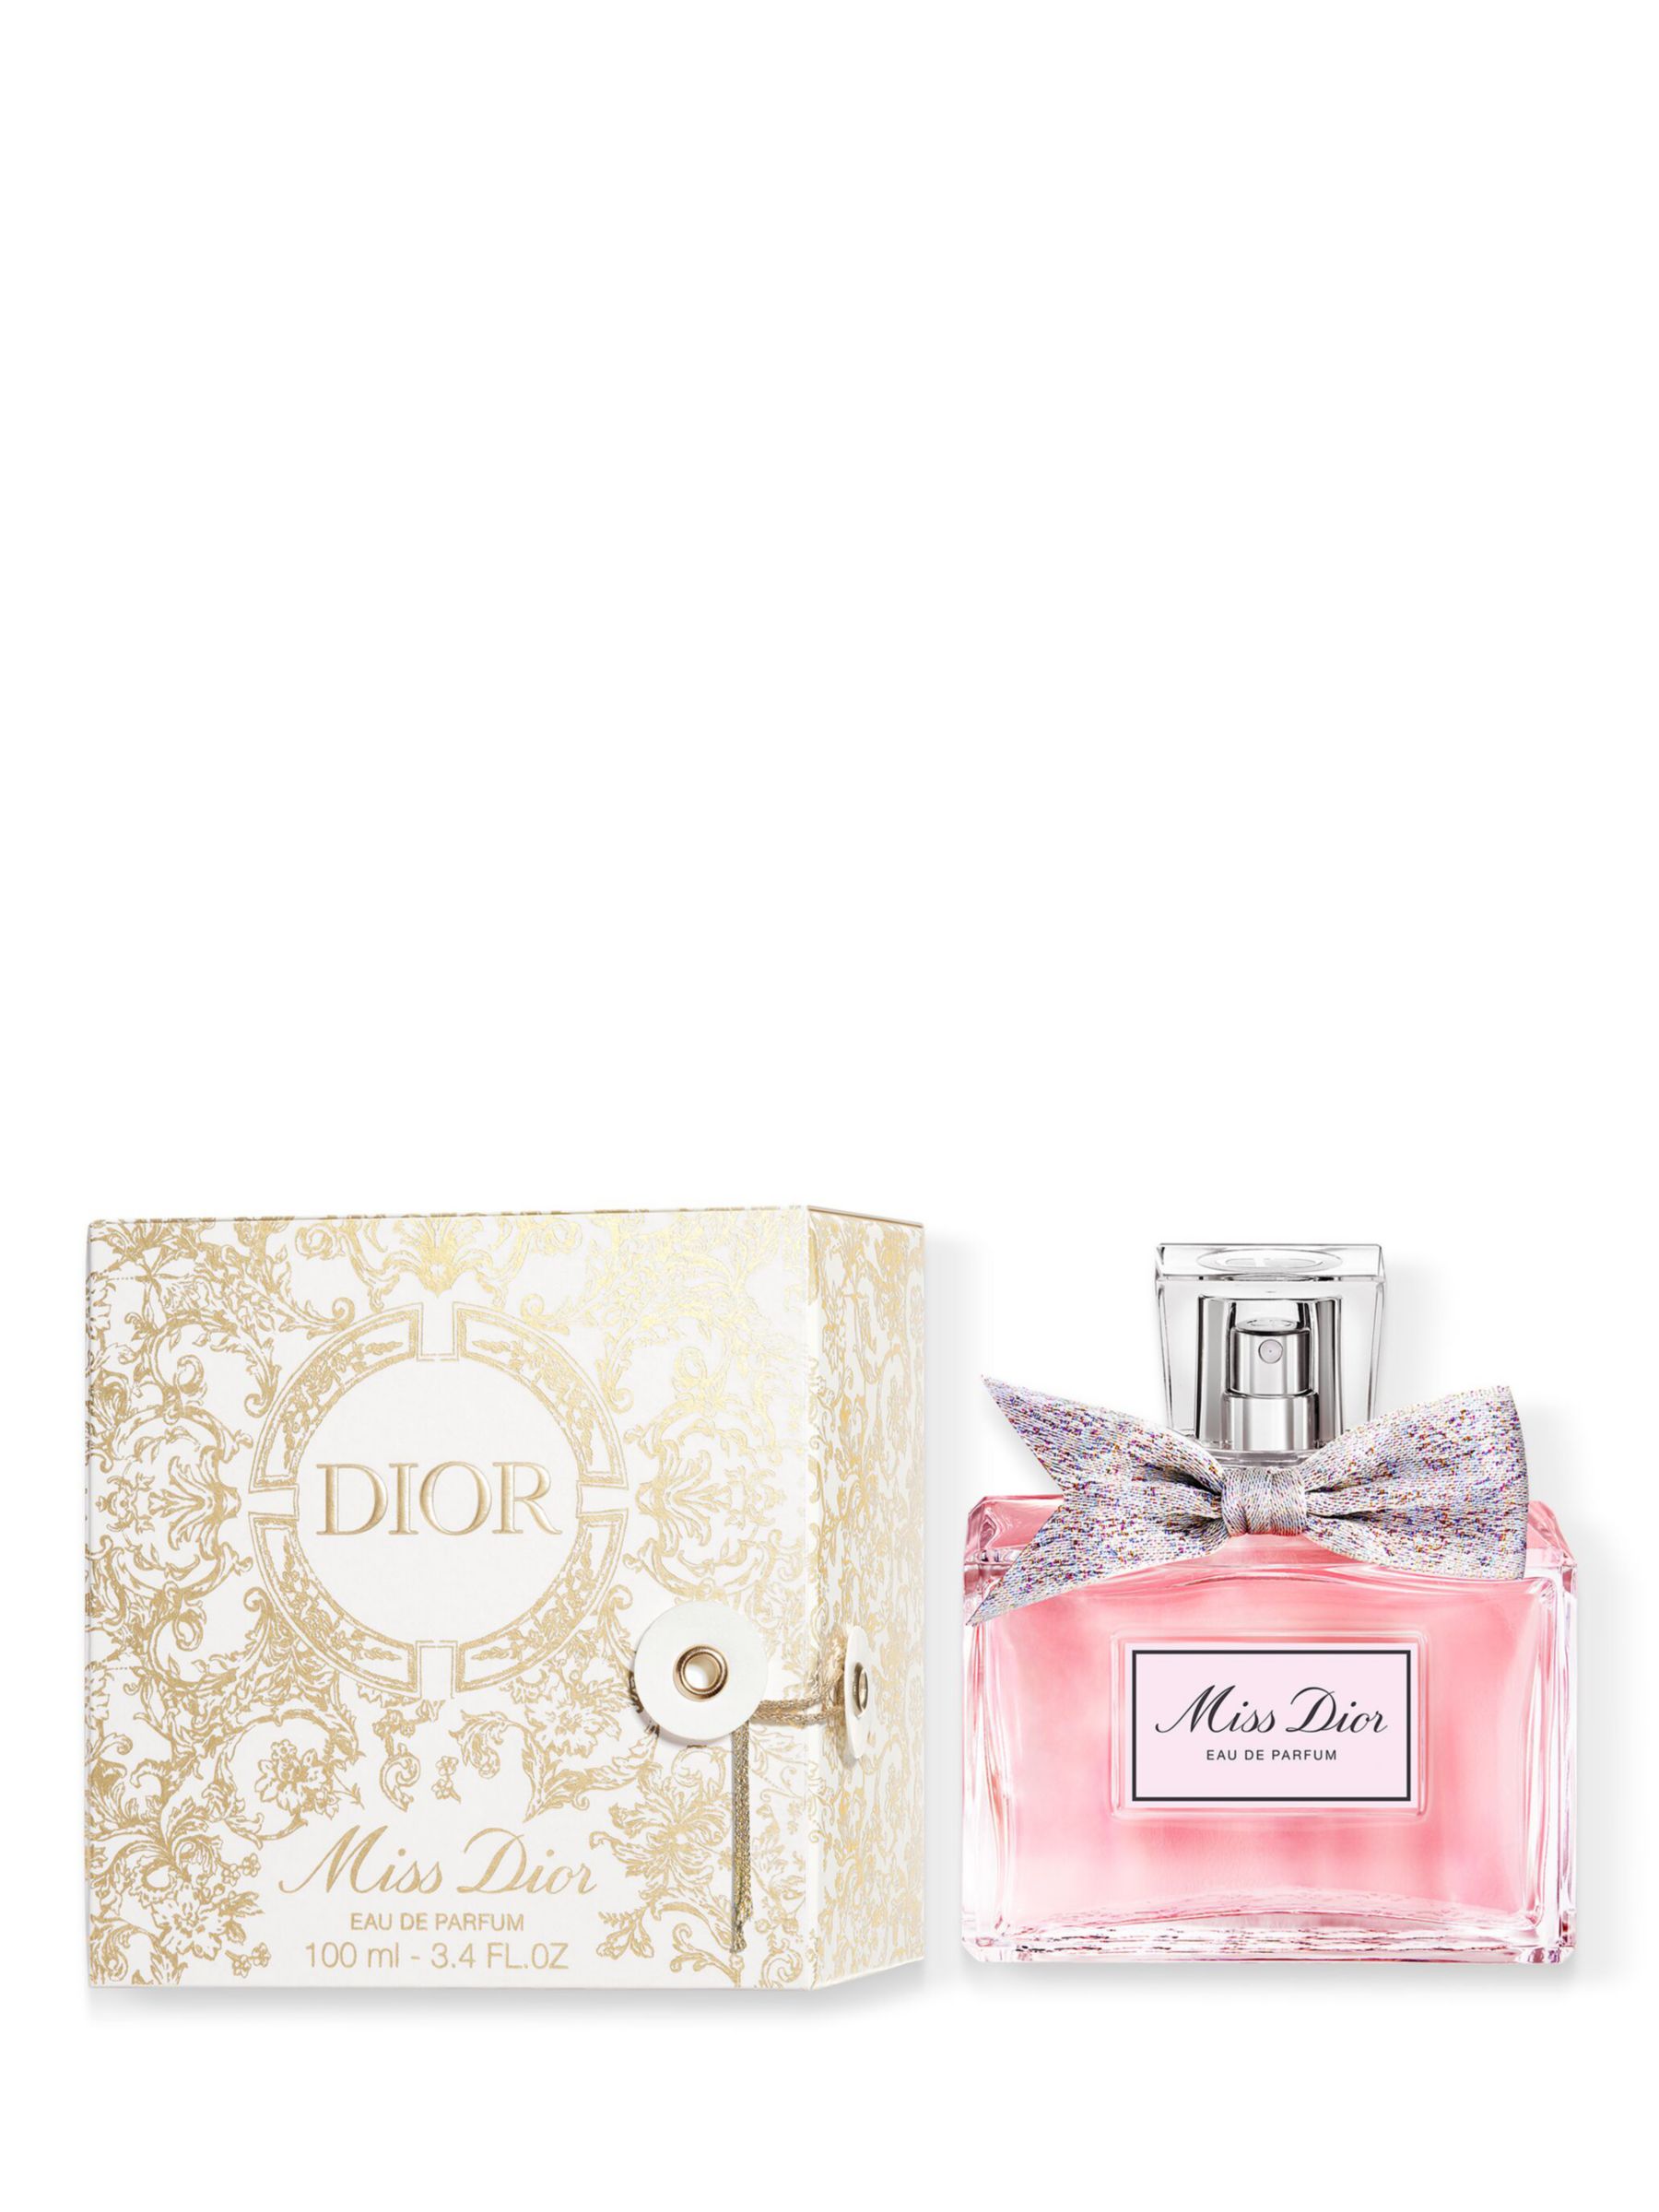 Give Diorissimo Eau de Parfum Spray for Her - Holiday Gift Idea